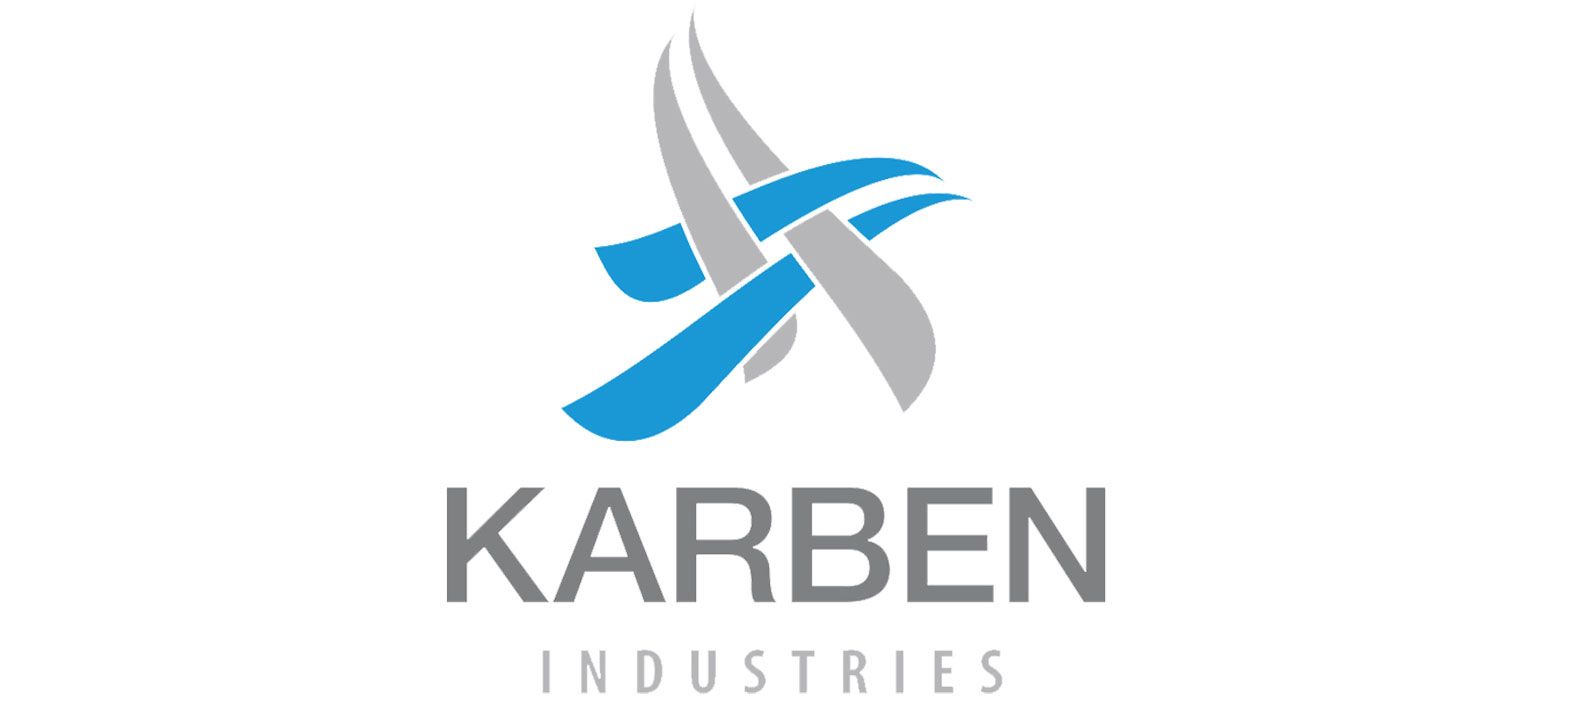 Karben Industries